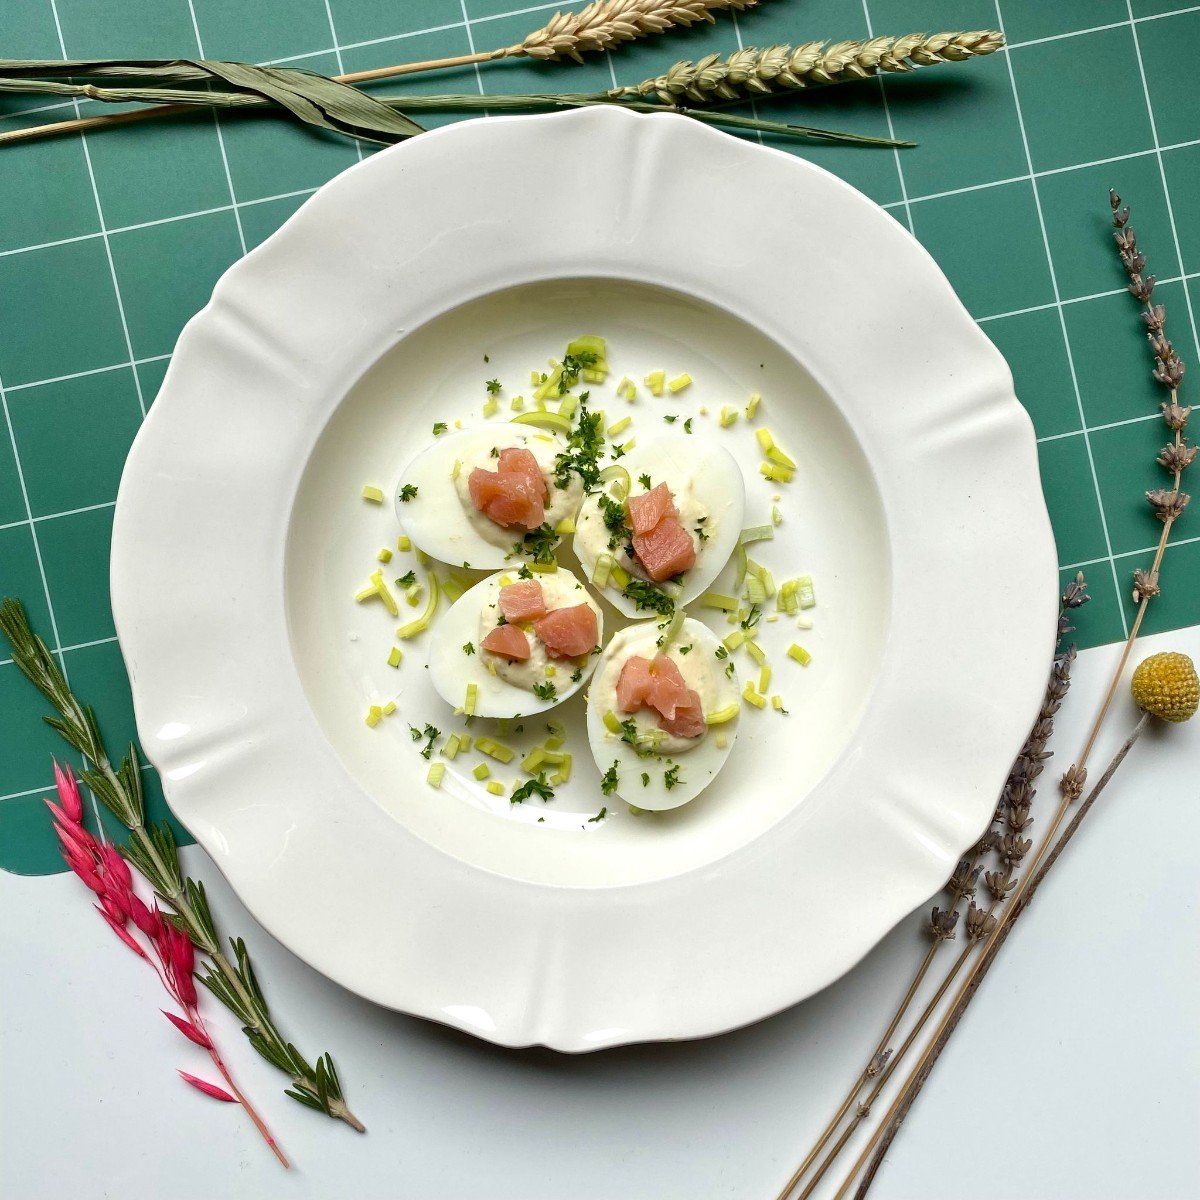 gevulde eieren met asperges zalm ei asperge recept snel simpel seizoensgroente eenvoudig lekker bord hapjes